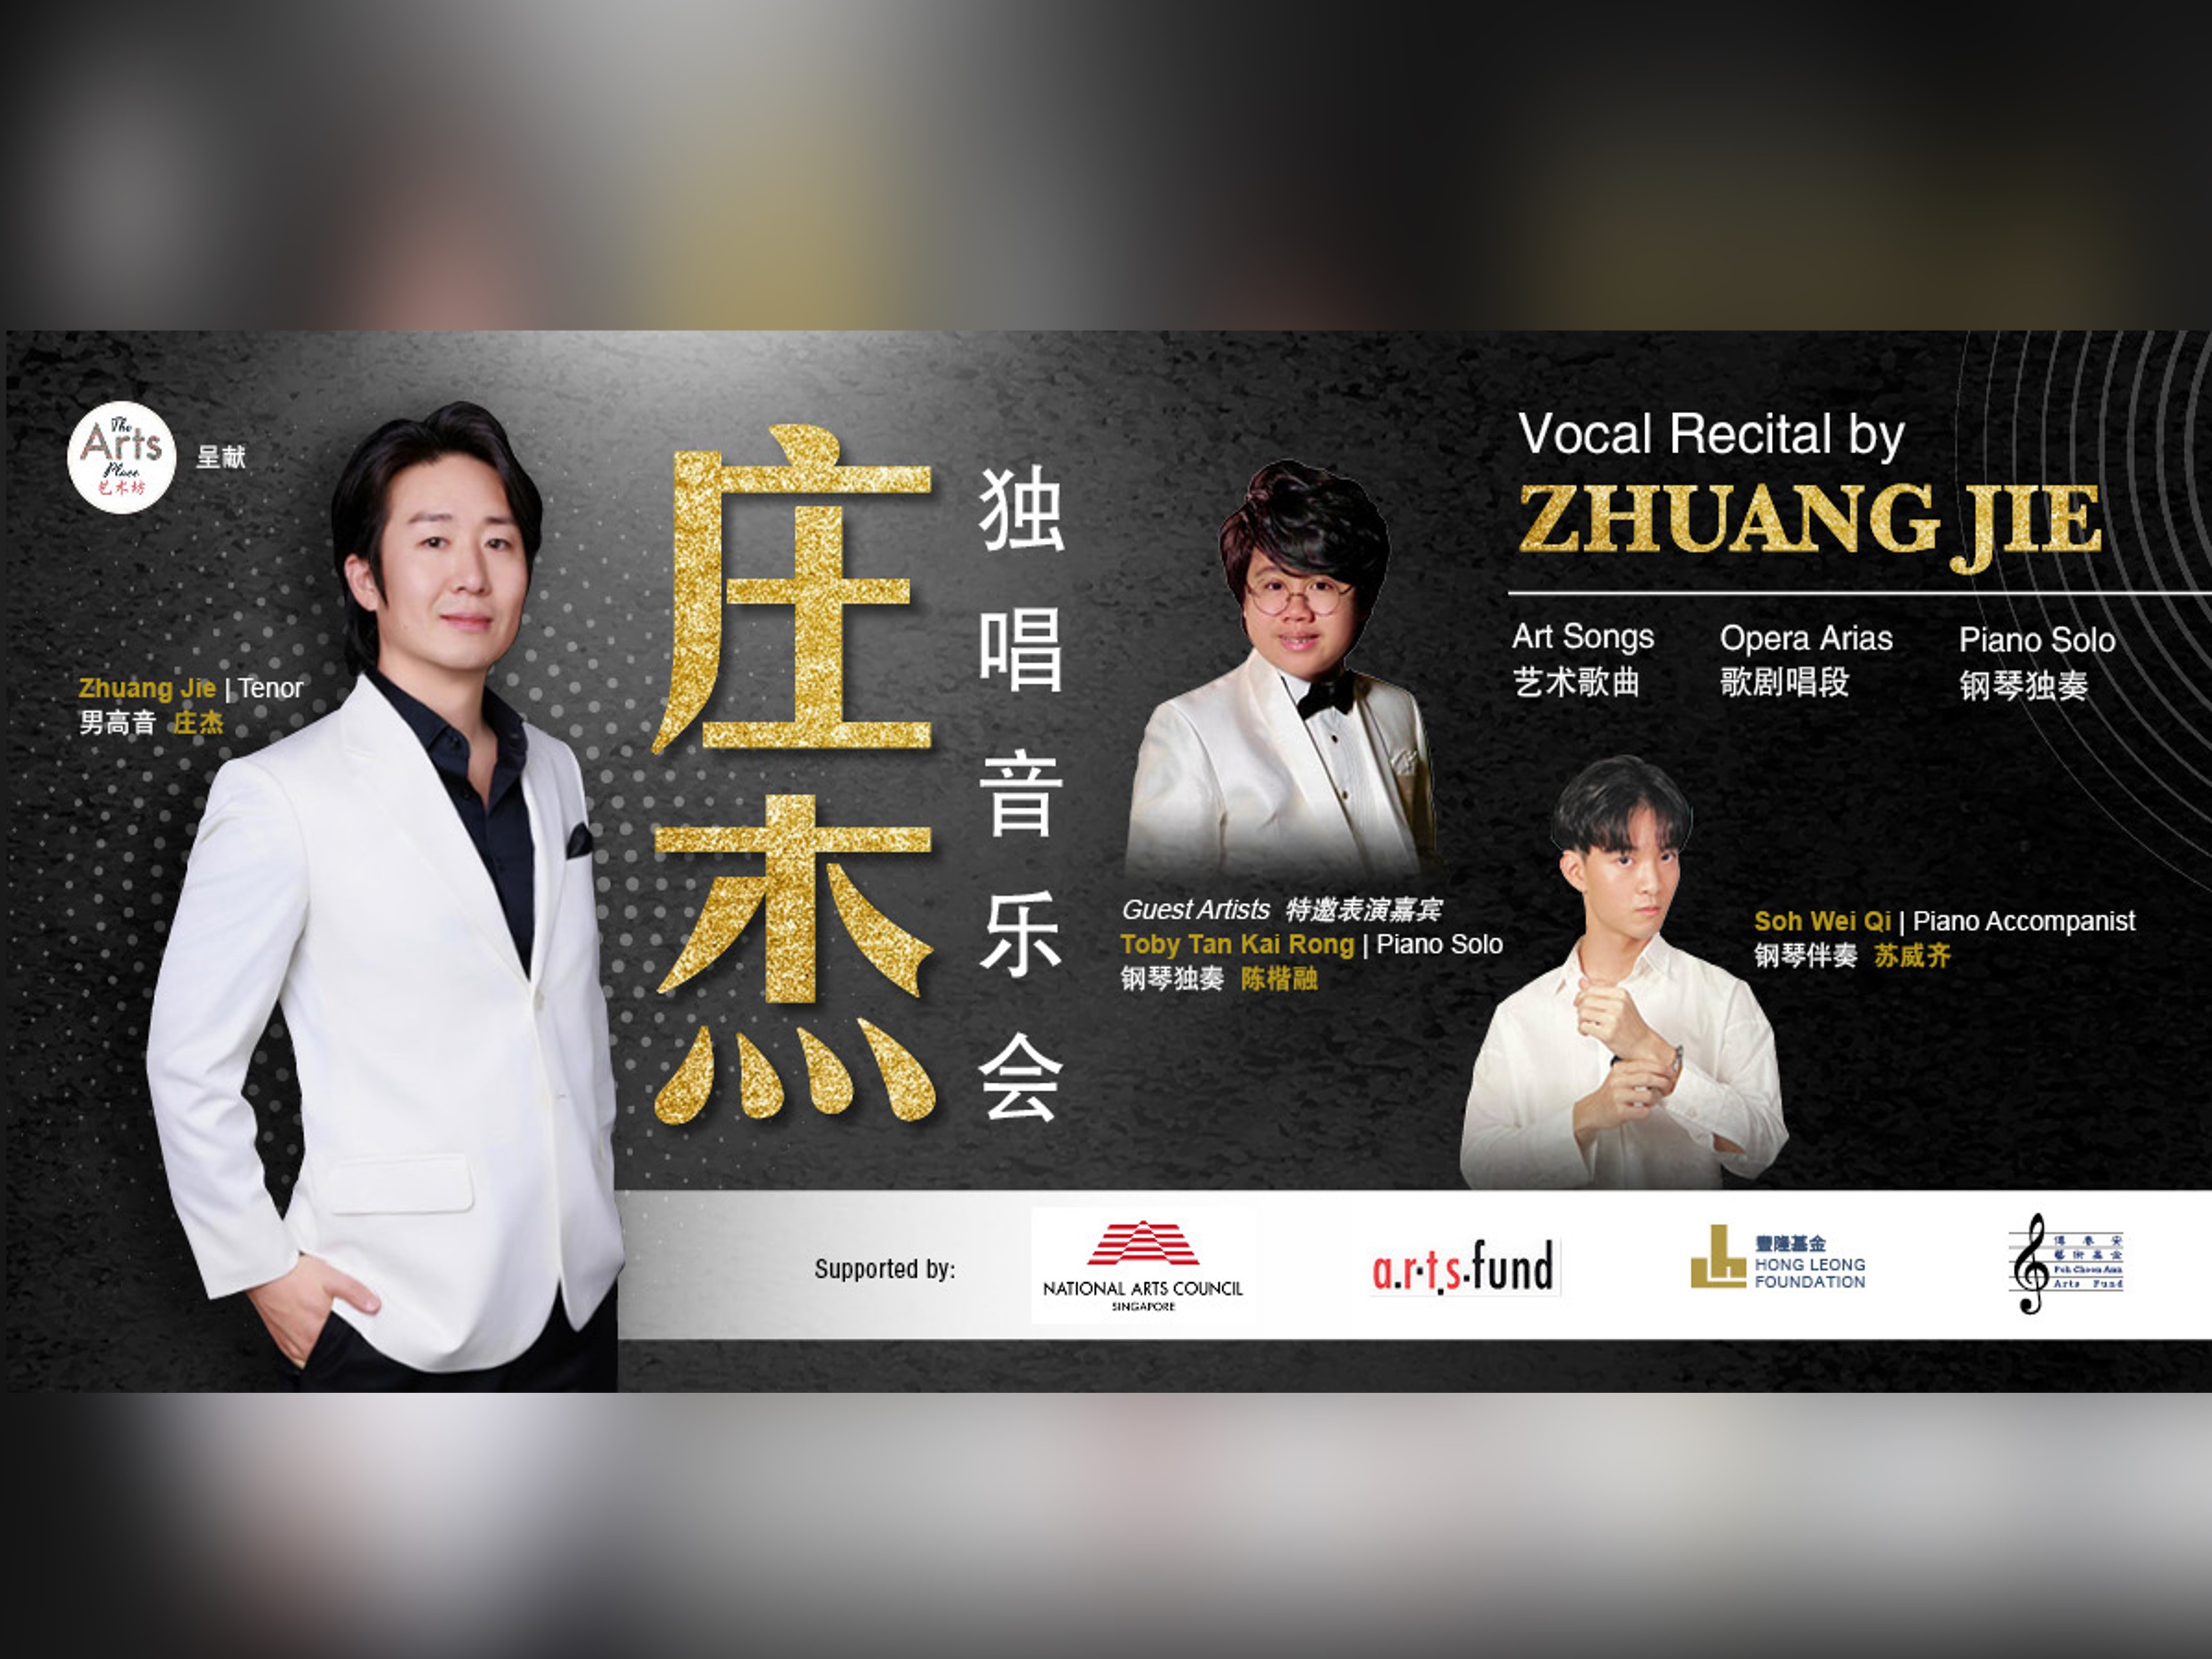 Vocal Recital by Zhuang Jie